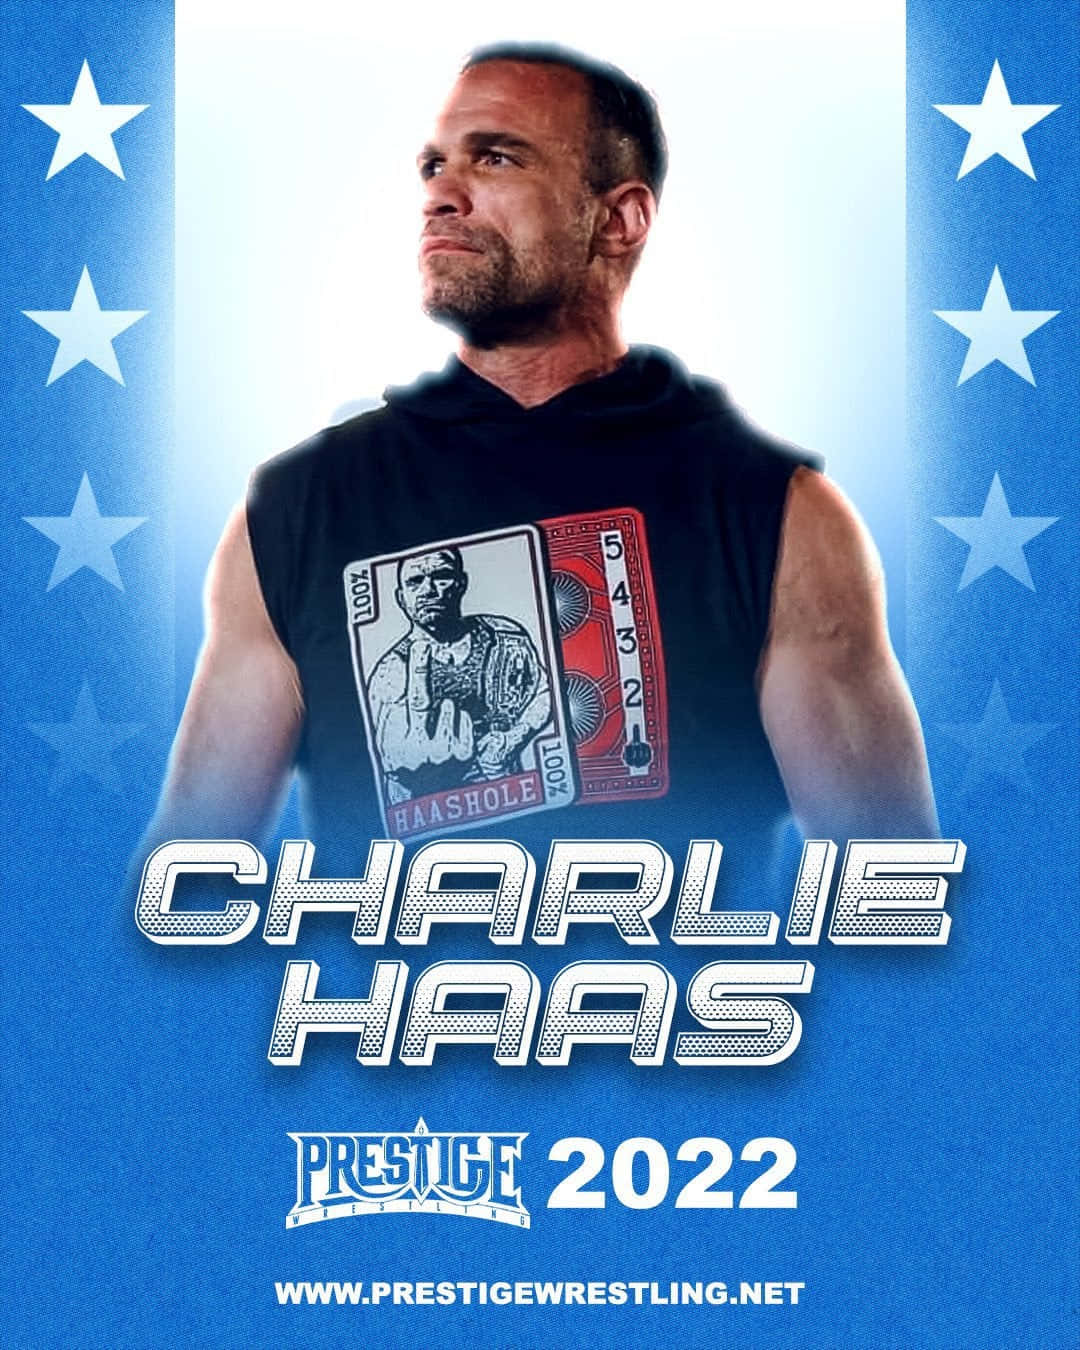 Charlie Haas Prestige Wrestling 2022 Poster Wallpaper